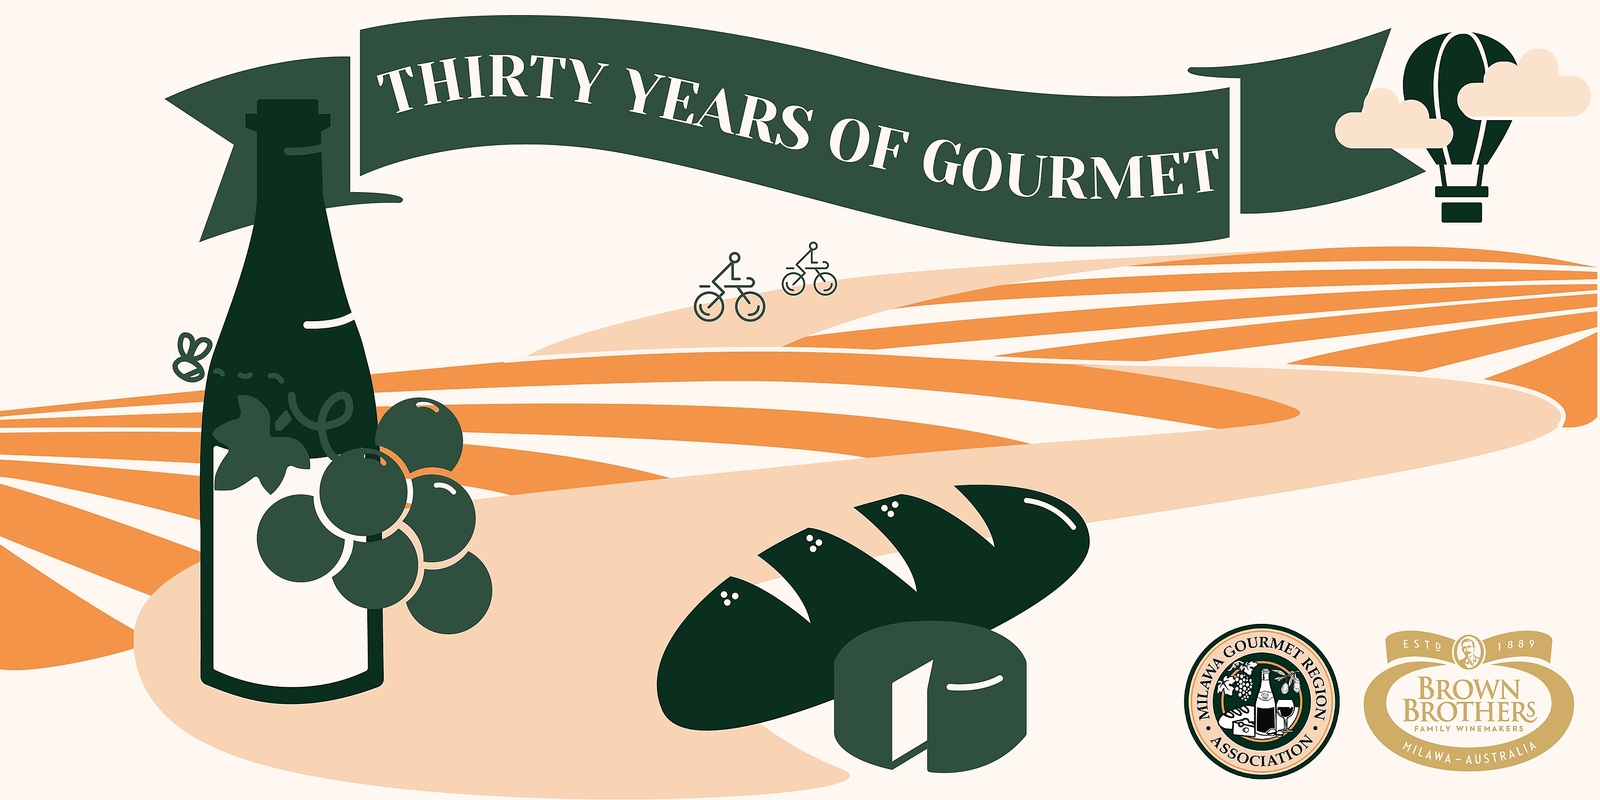 Banner image for 30 years of Gourmet! Milawa Gourmet Region 30th Birthday Gala Dinner